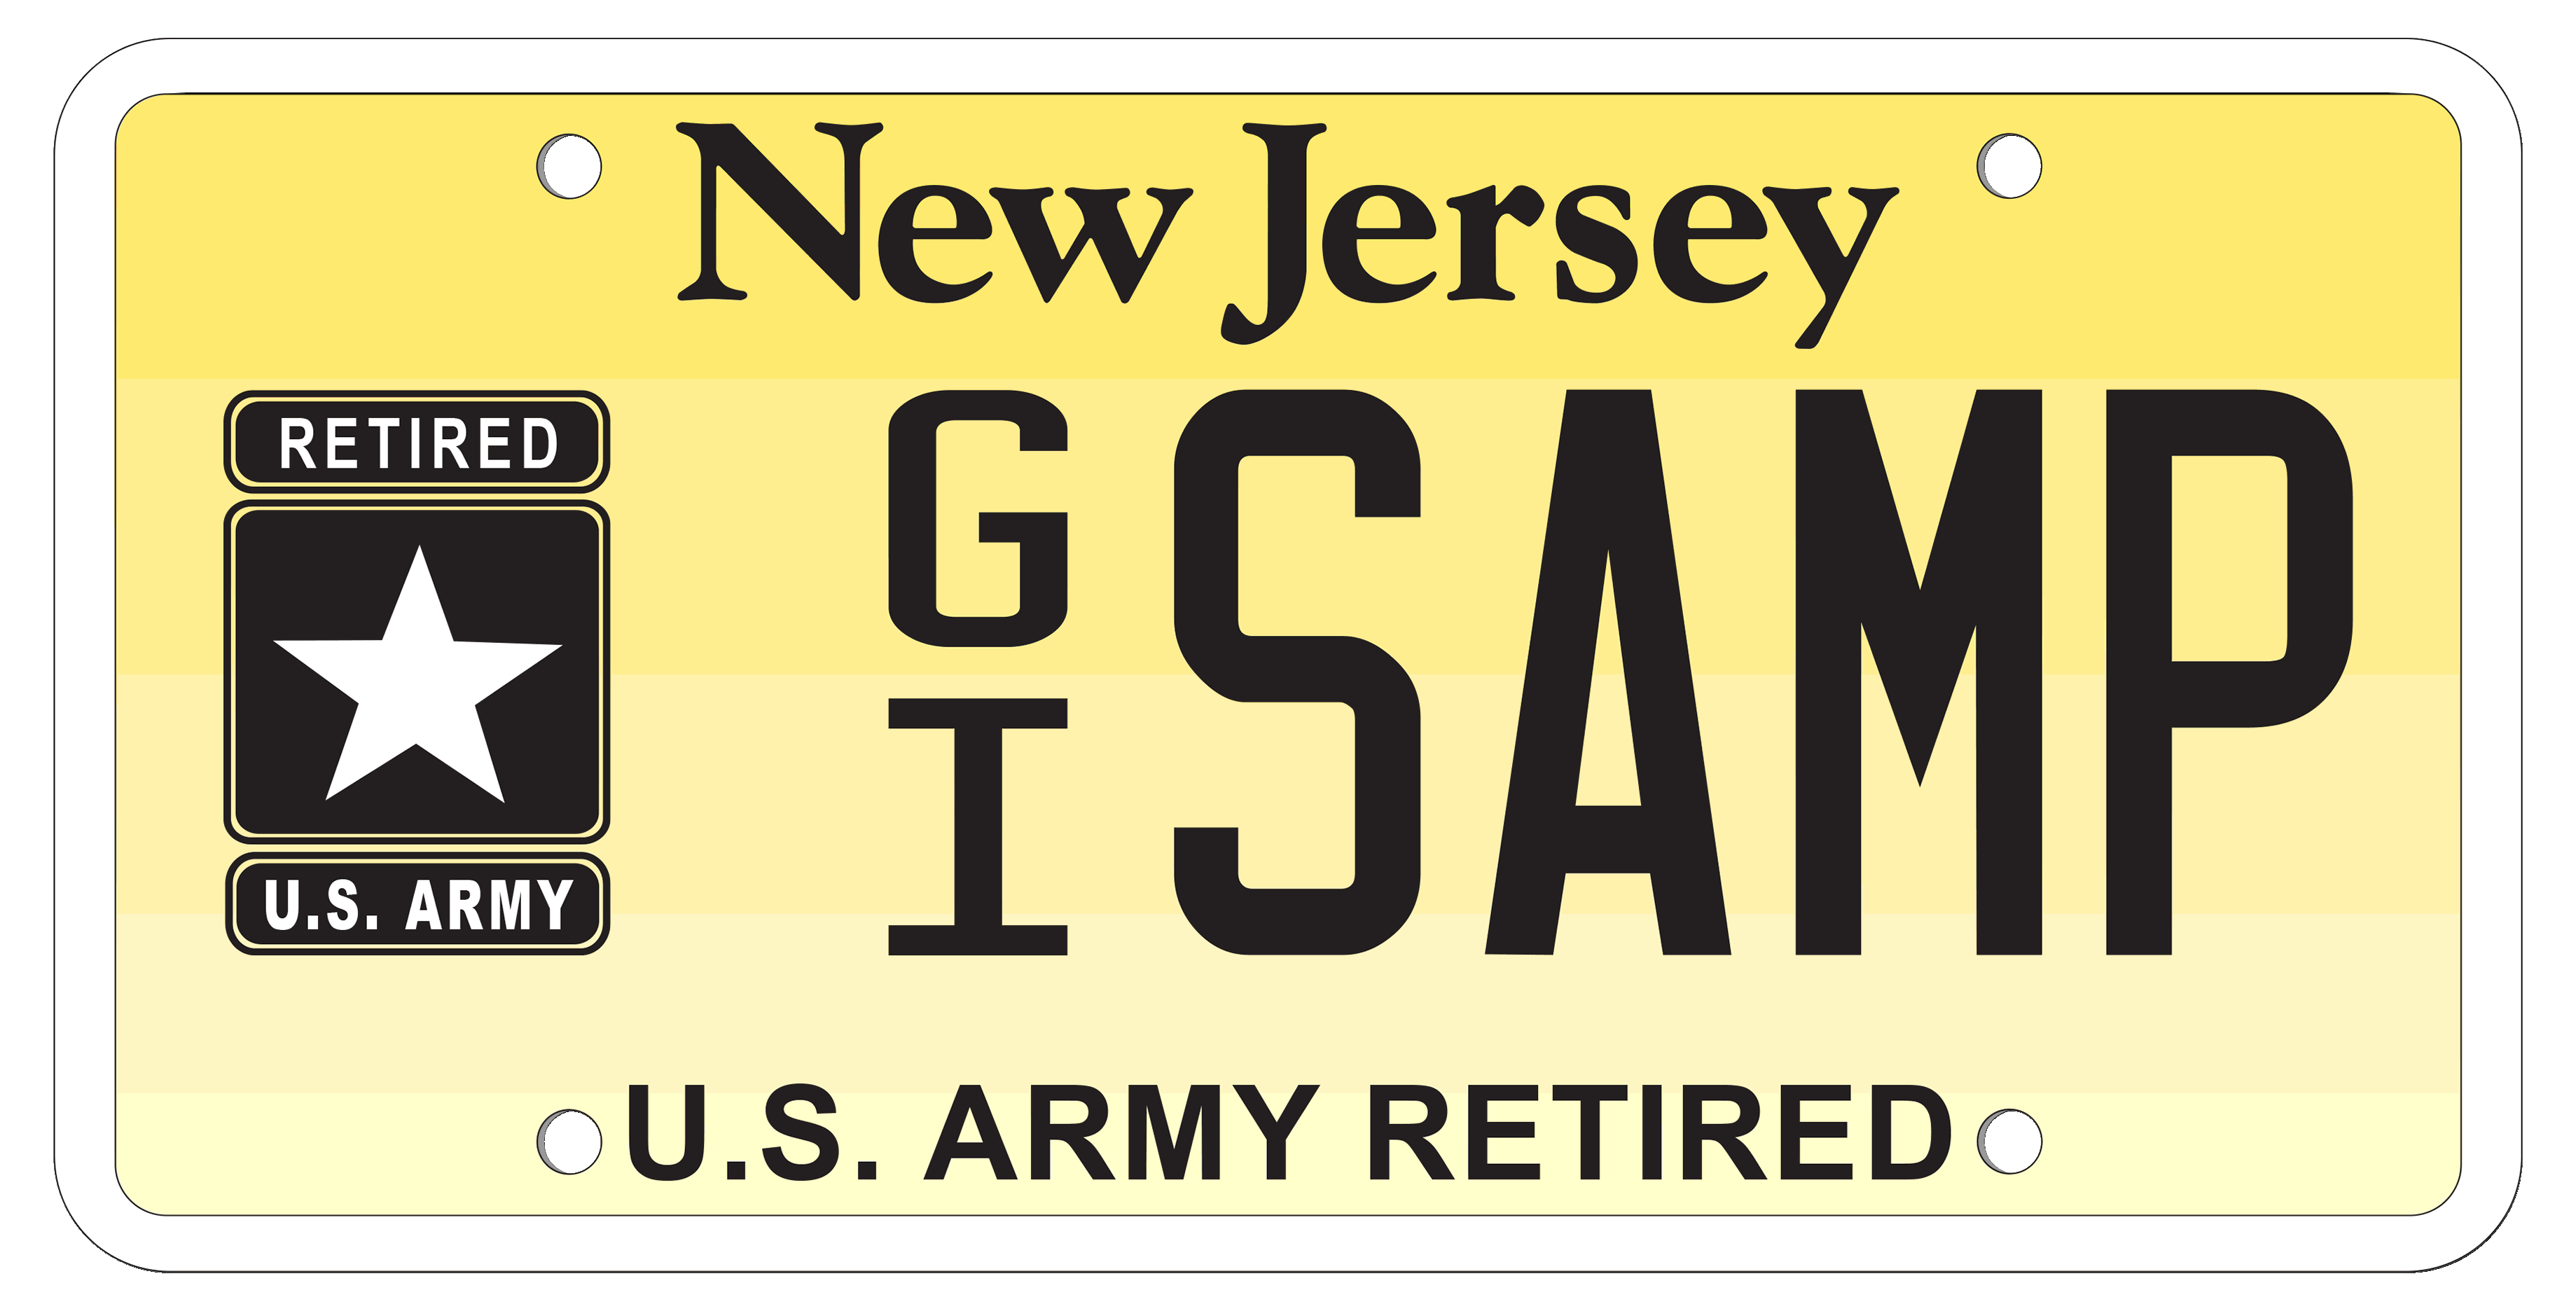 Retired U.S. Army